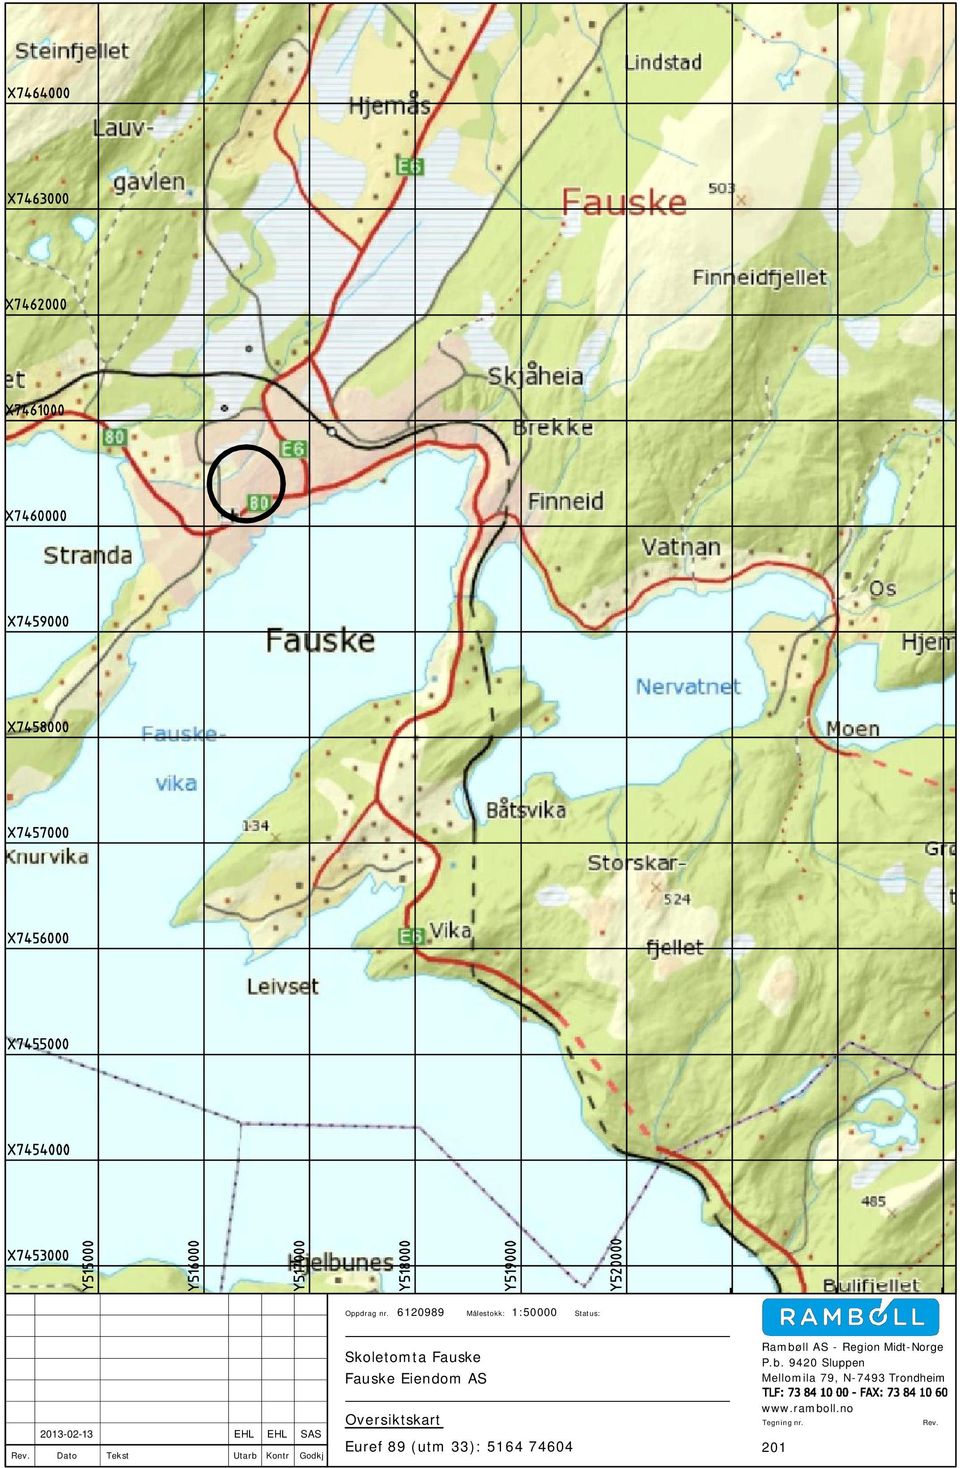 Rambøll AS - Region Midt-Norge P.b. 9420 Sluppen Mellomila 79, N-7493